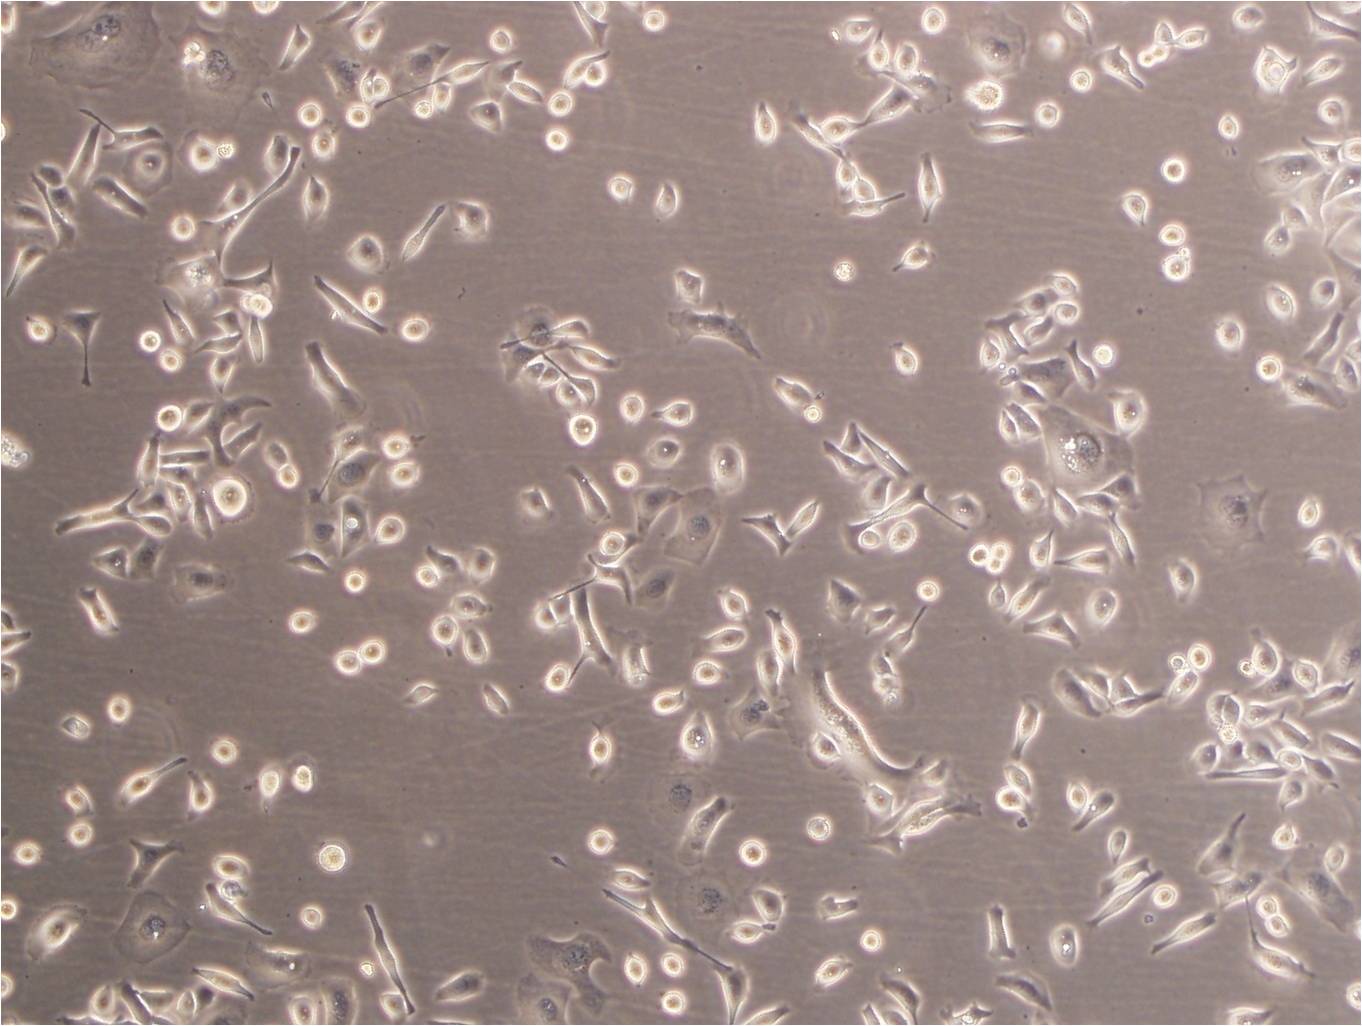 U-251MG Fresh Cells|人神经胶质瘤细胞(送STR基因图谱)